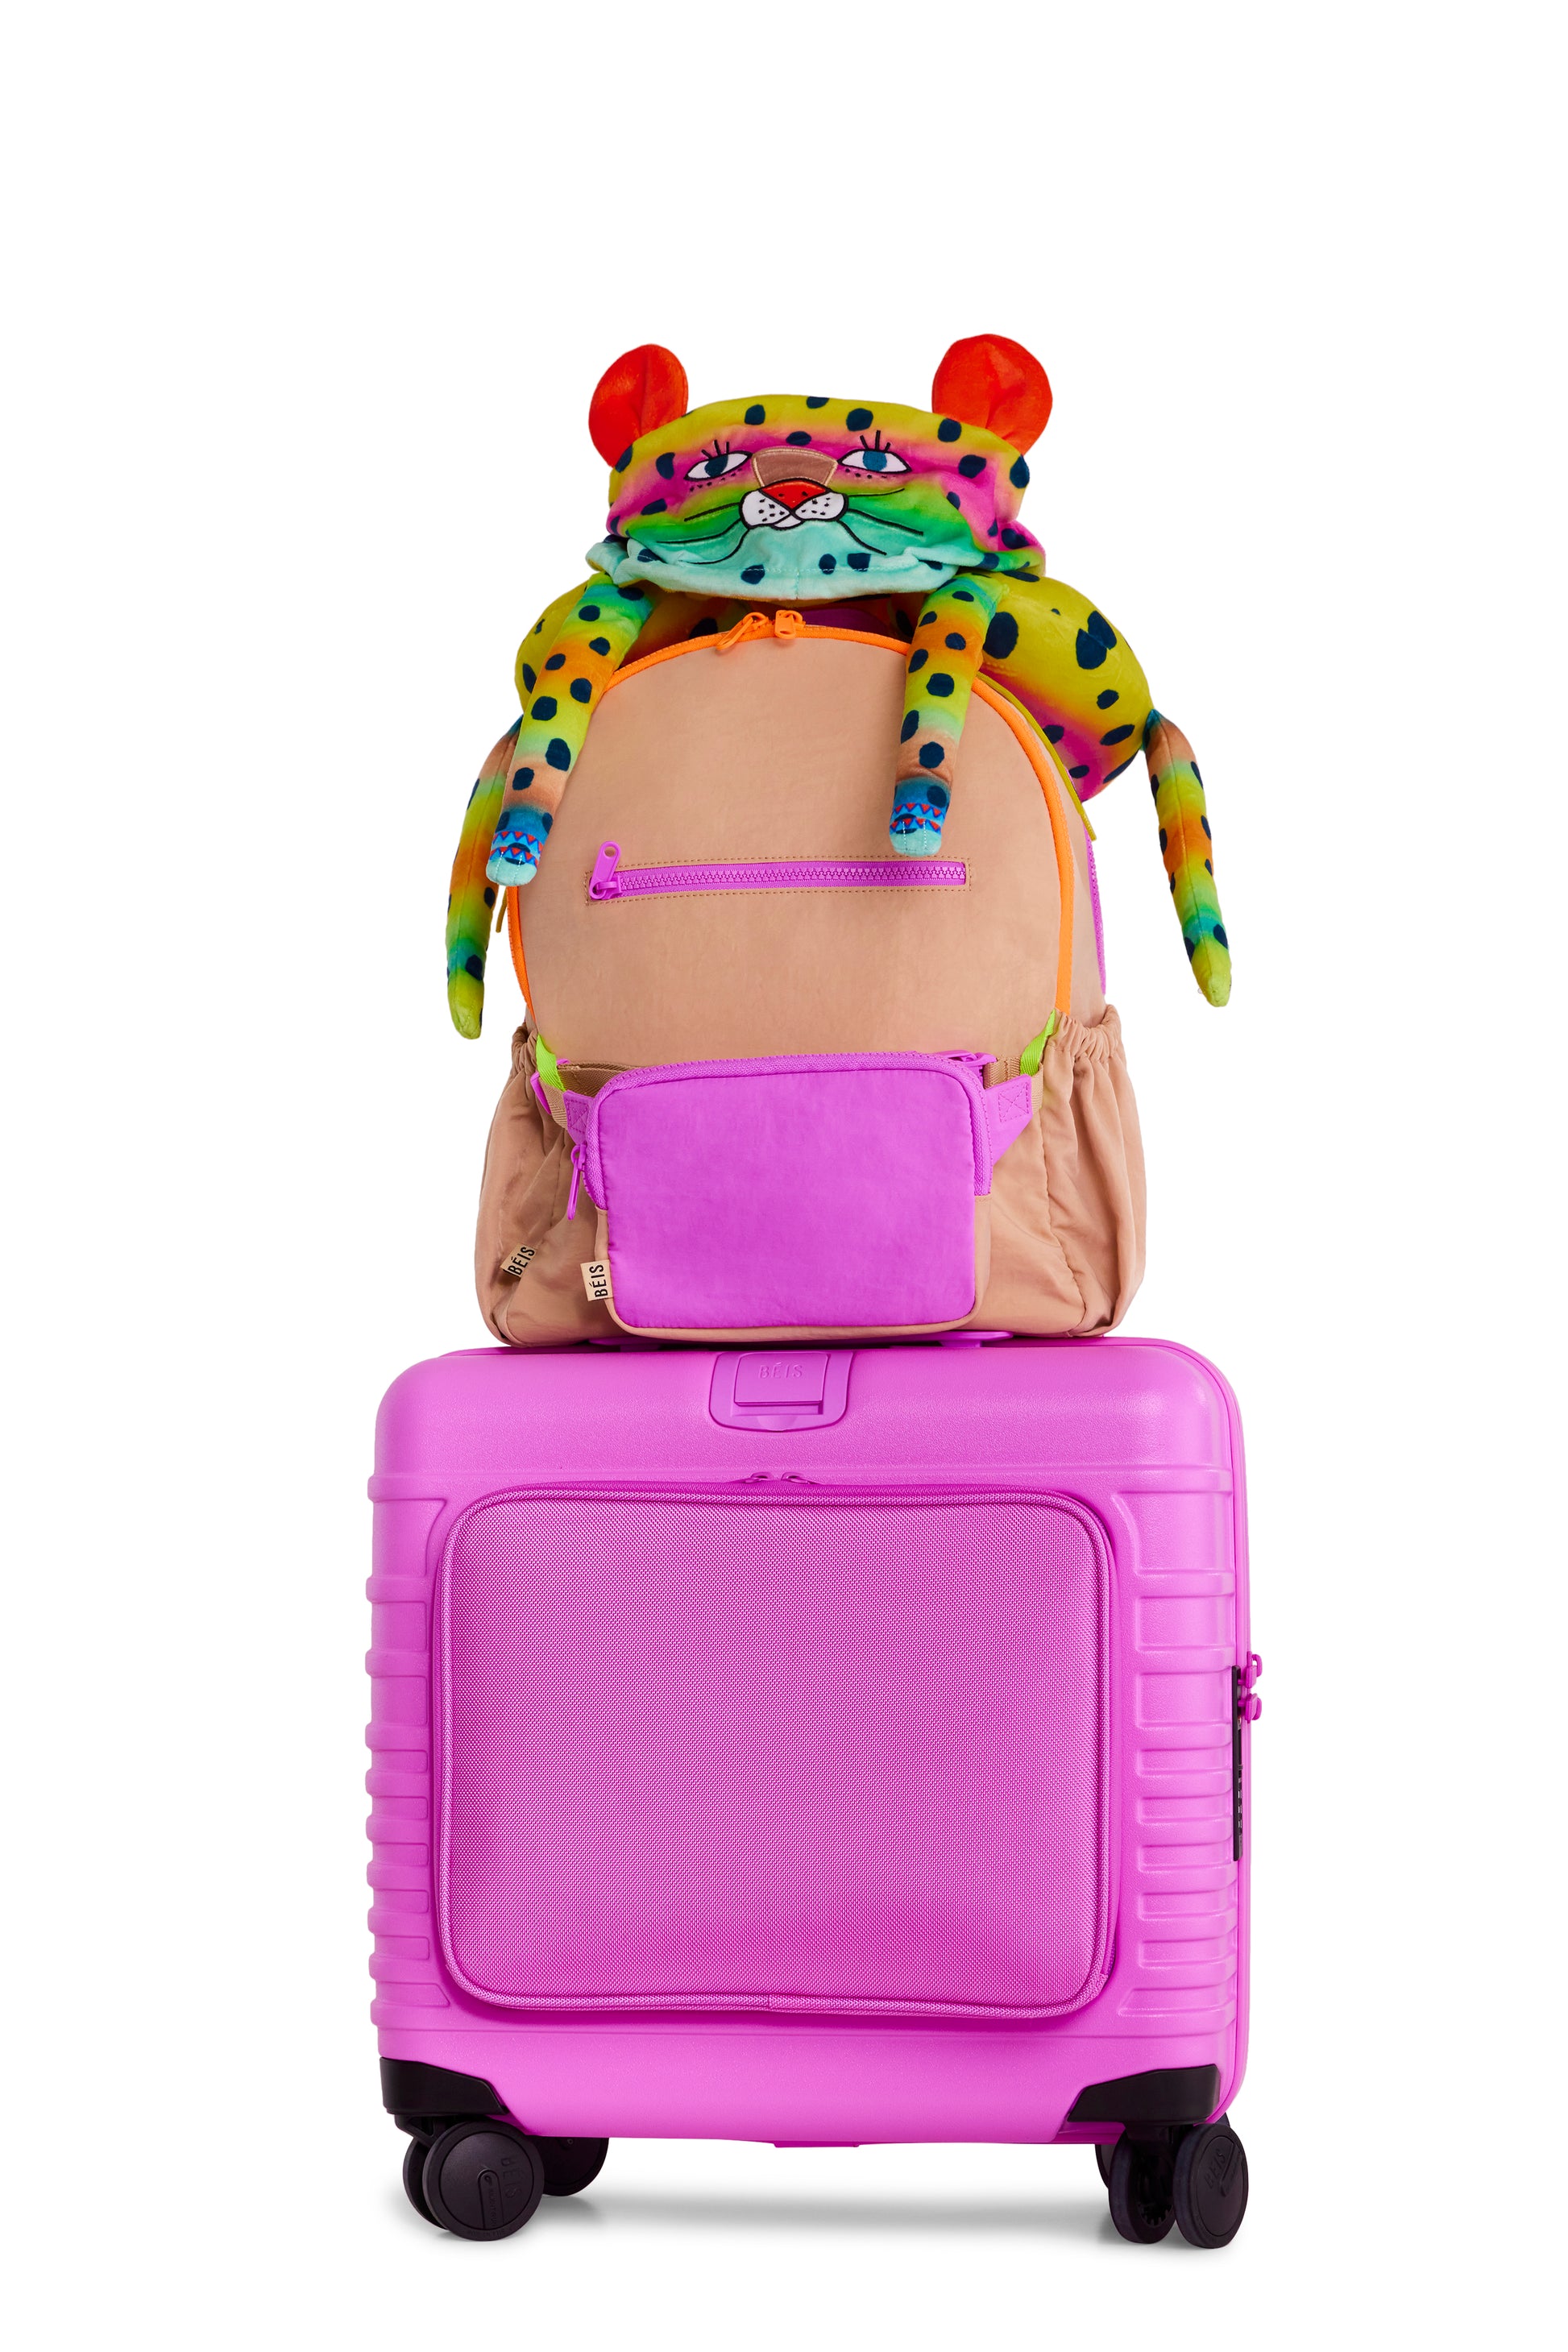 BÉIS 'The Kids Backpack' in Beige - Best Travel Backpack For Kids In Beige